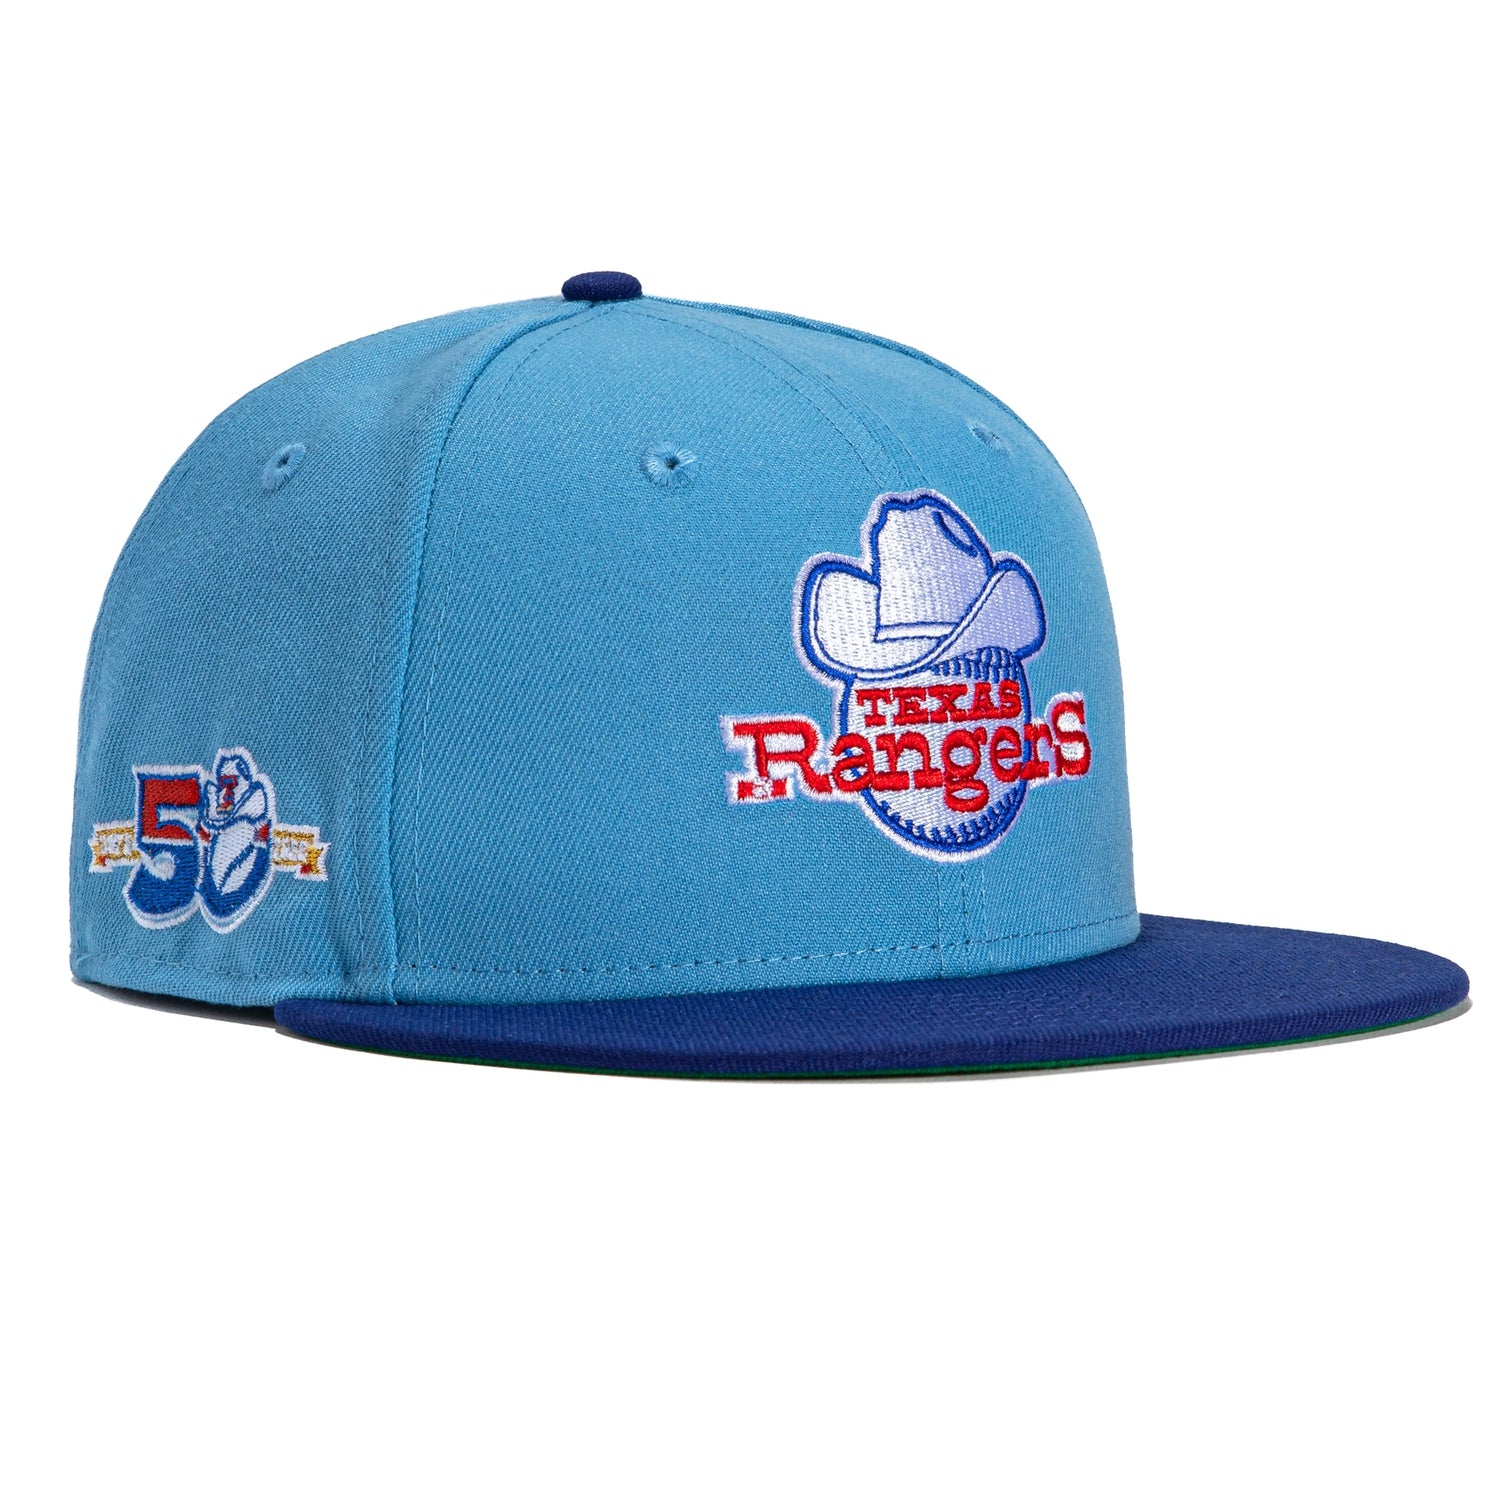 New Era 59FIFTY Texas Rangers 50th Anniversary Patch Hat - Light Blue, Royal Light Blue/Royal / 7 1/8